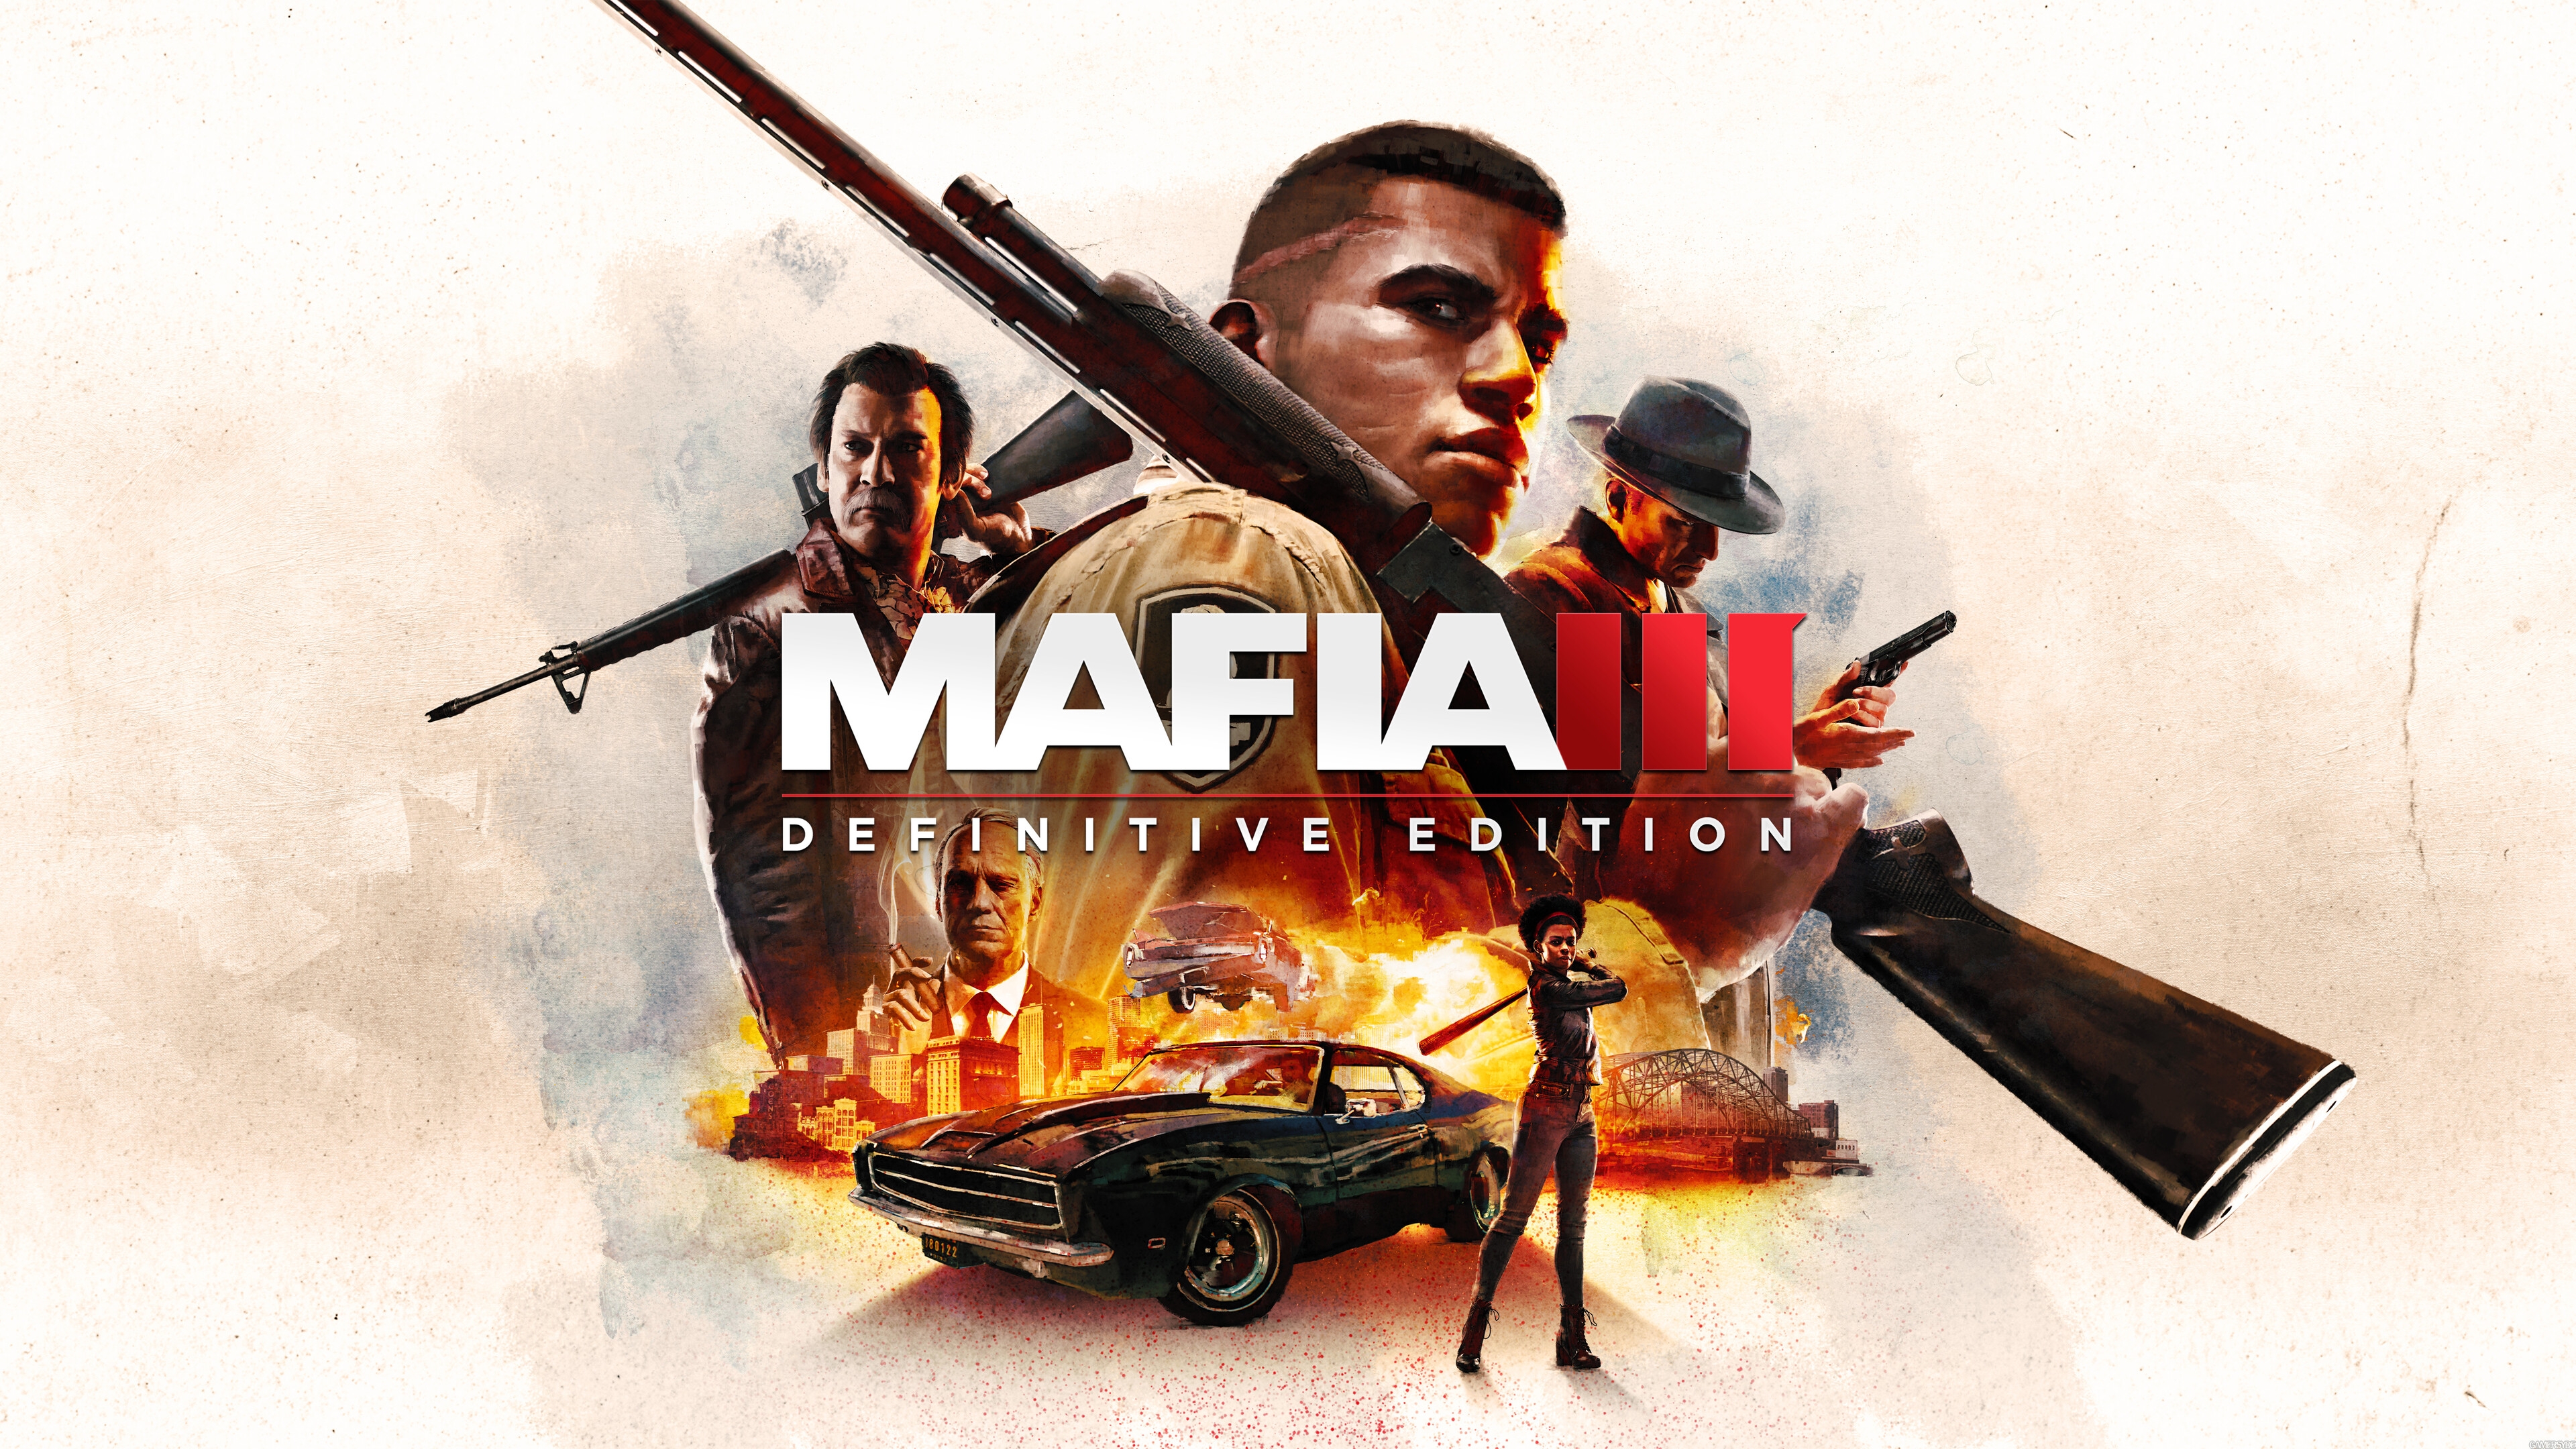 Mafia III (Microsoft Xbox One) Complete!! Map, Booklet, and Unused DLC  Card!!